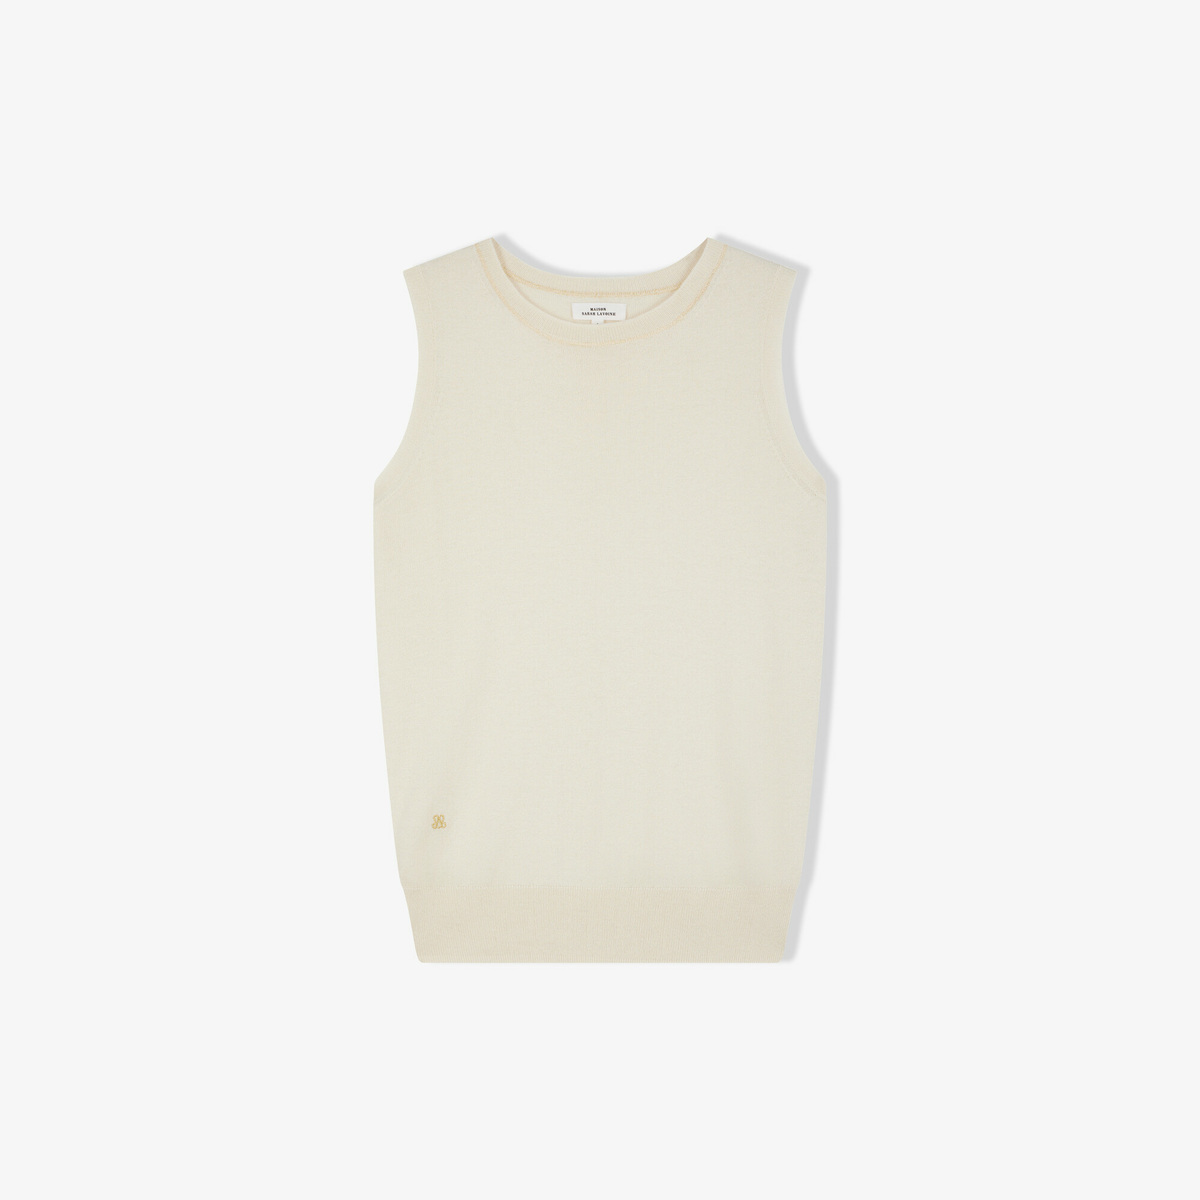 Villette jumper, White - Sleeveless - Silk and cashmere - image 1